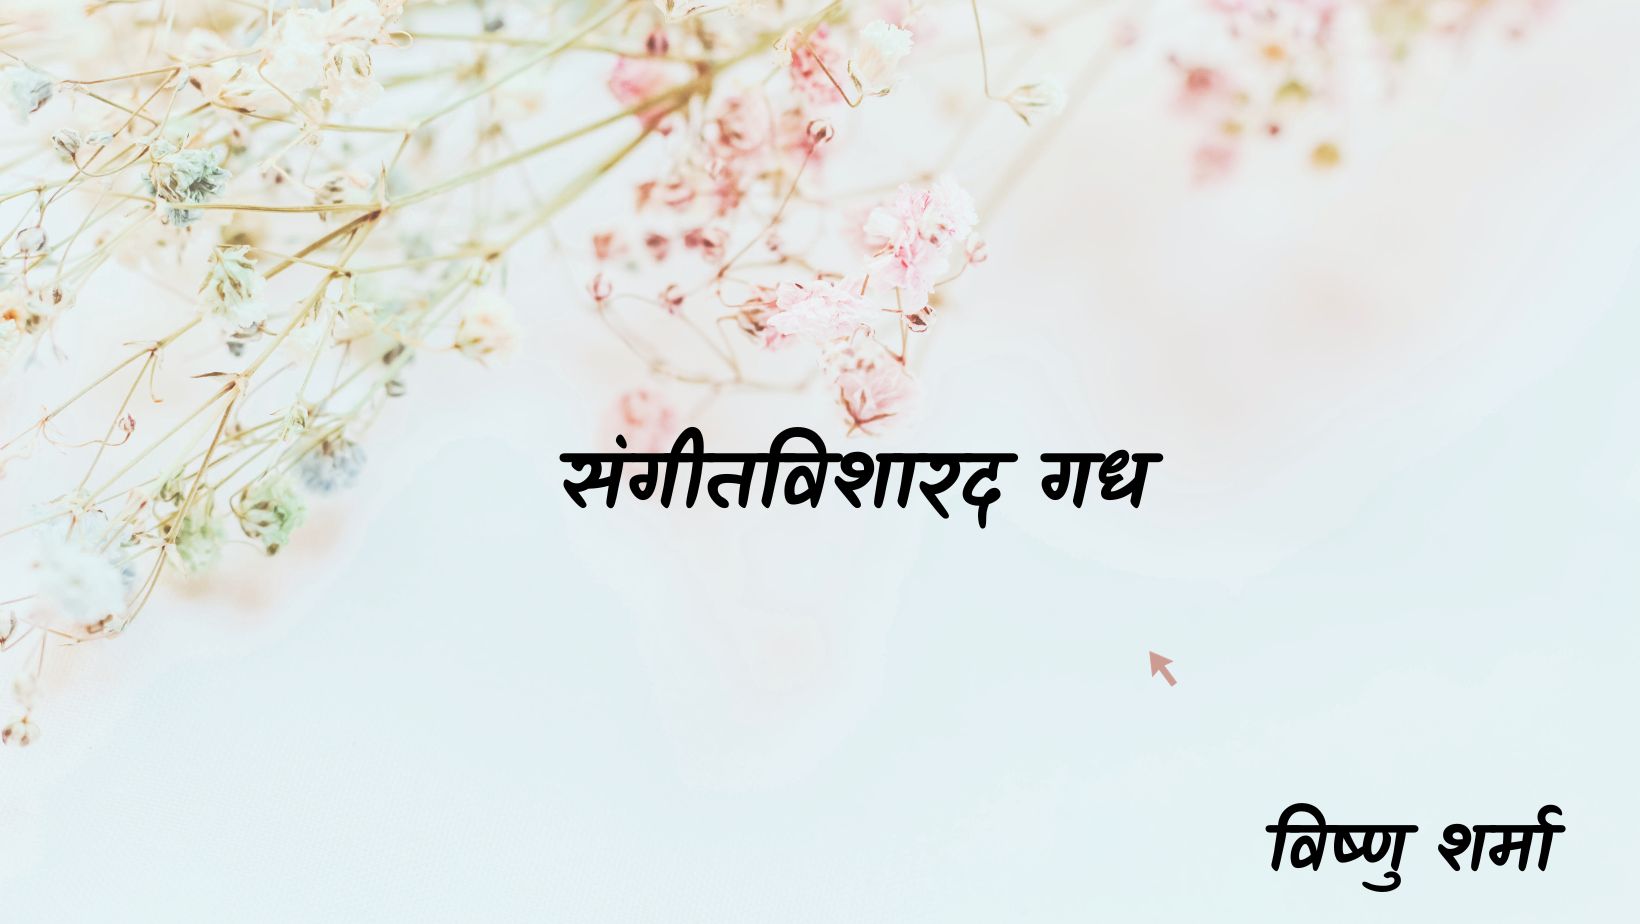 संगीतविशारद गधा - पंचतंत्र - विष्णु शर्मा | Sangeetvisharad Gadha - Panchtantra - Vishnu Sharma by विष्णु शर्मा